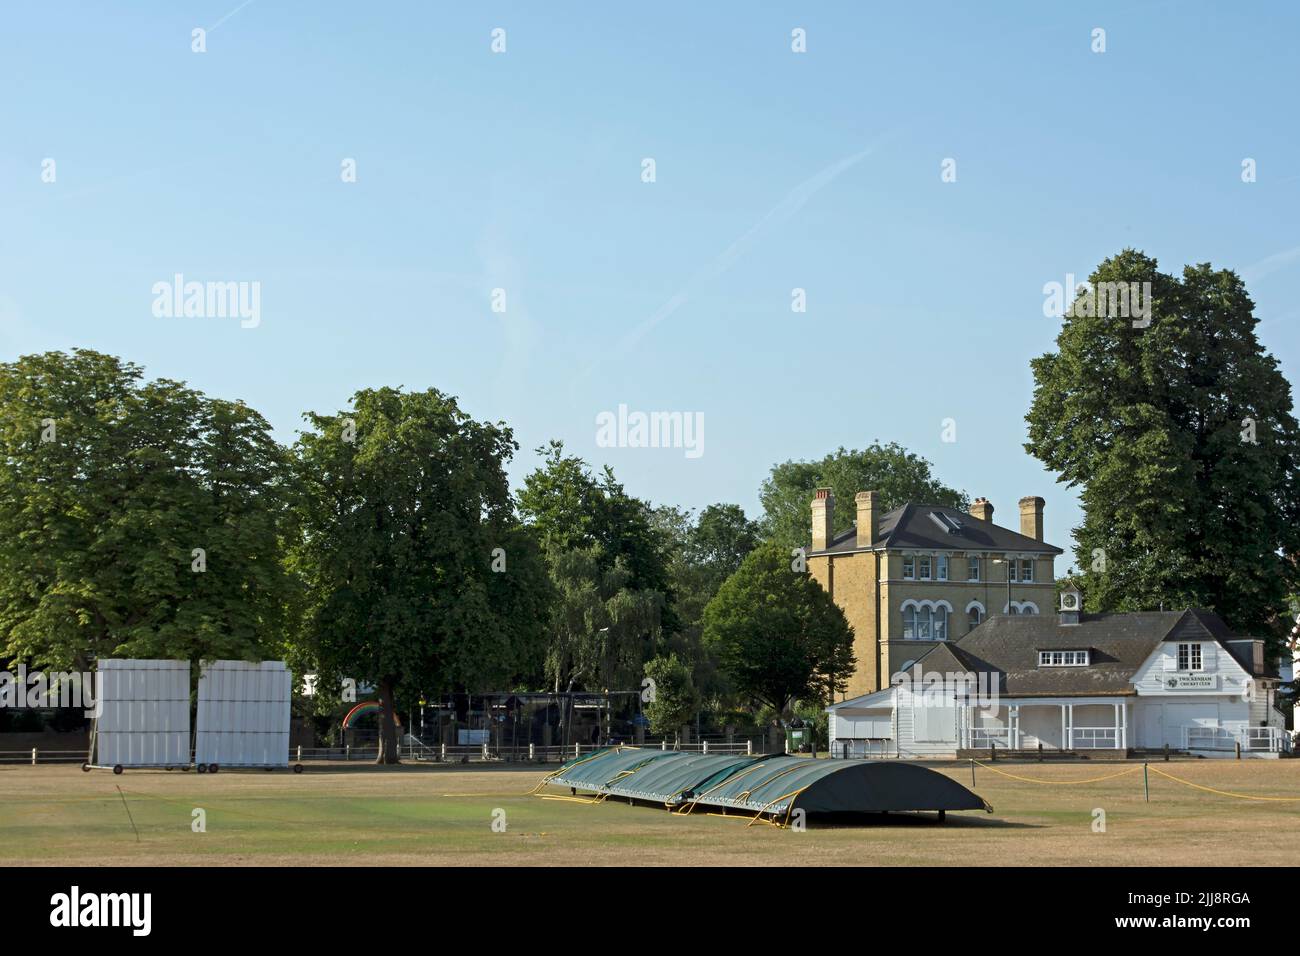 viewed across twickenham green, the covers, pavilion and a sight screen of twickenham cricket club, twickenham, middlesex, england Stock Photo